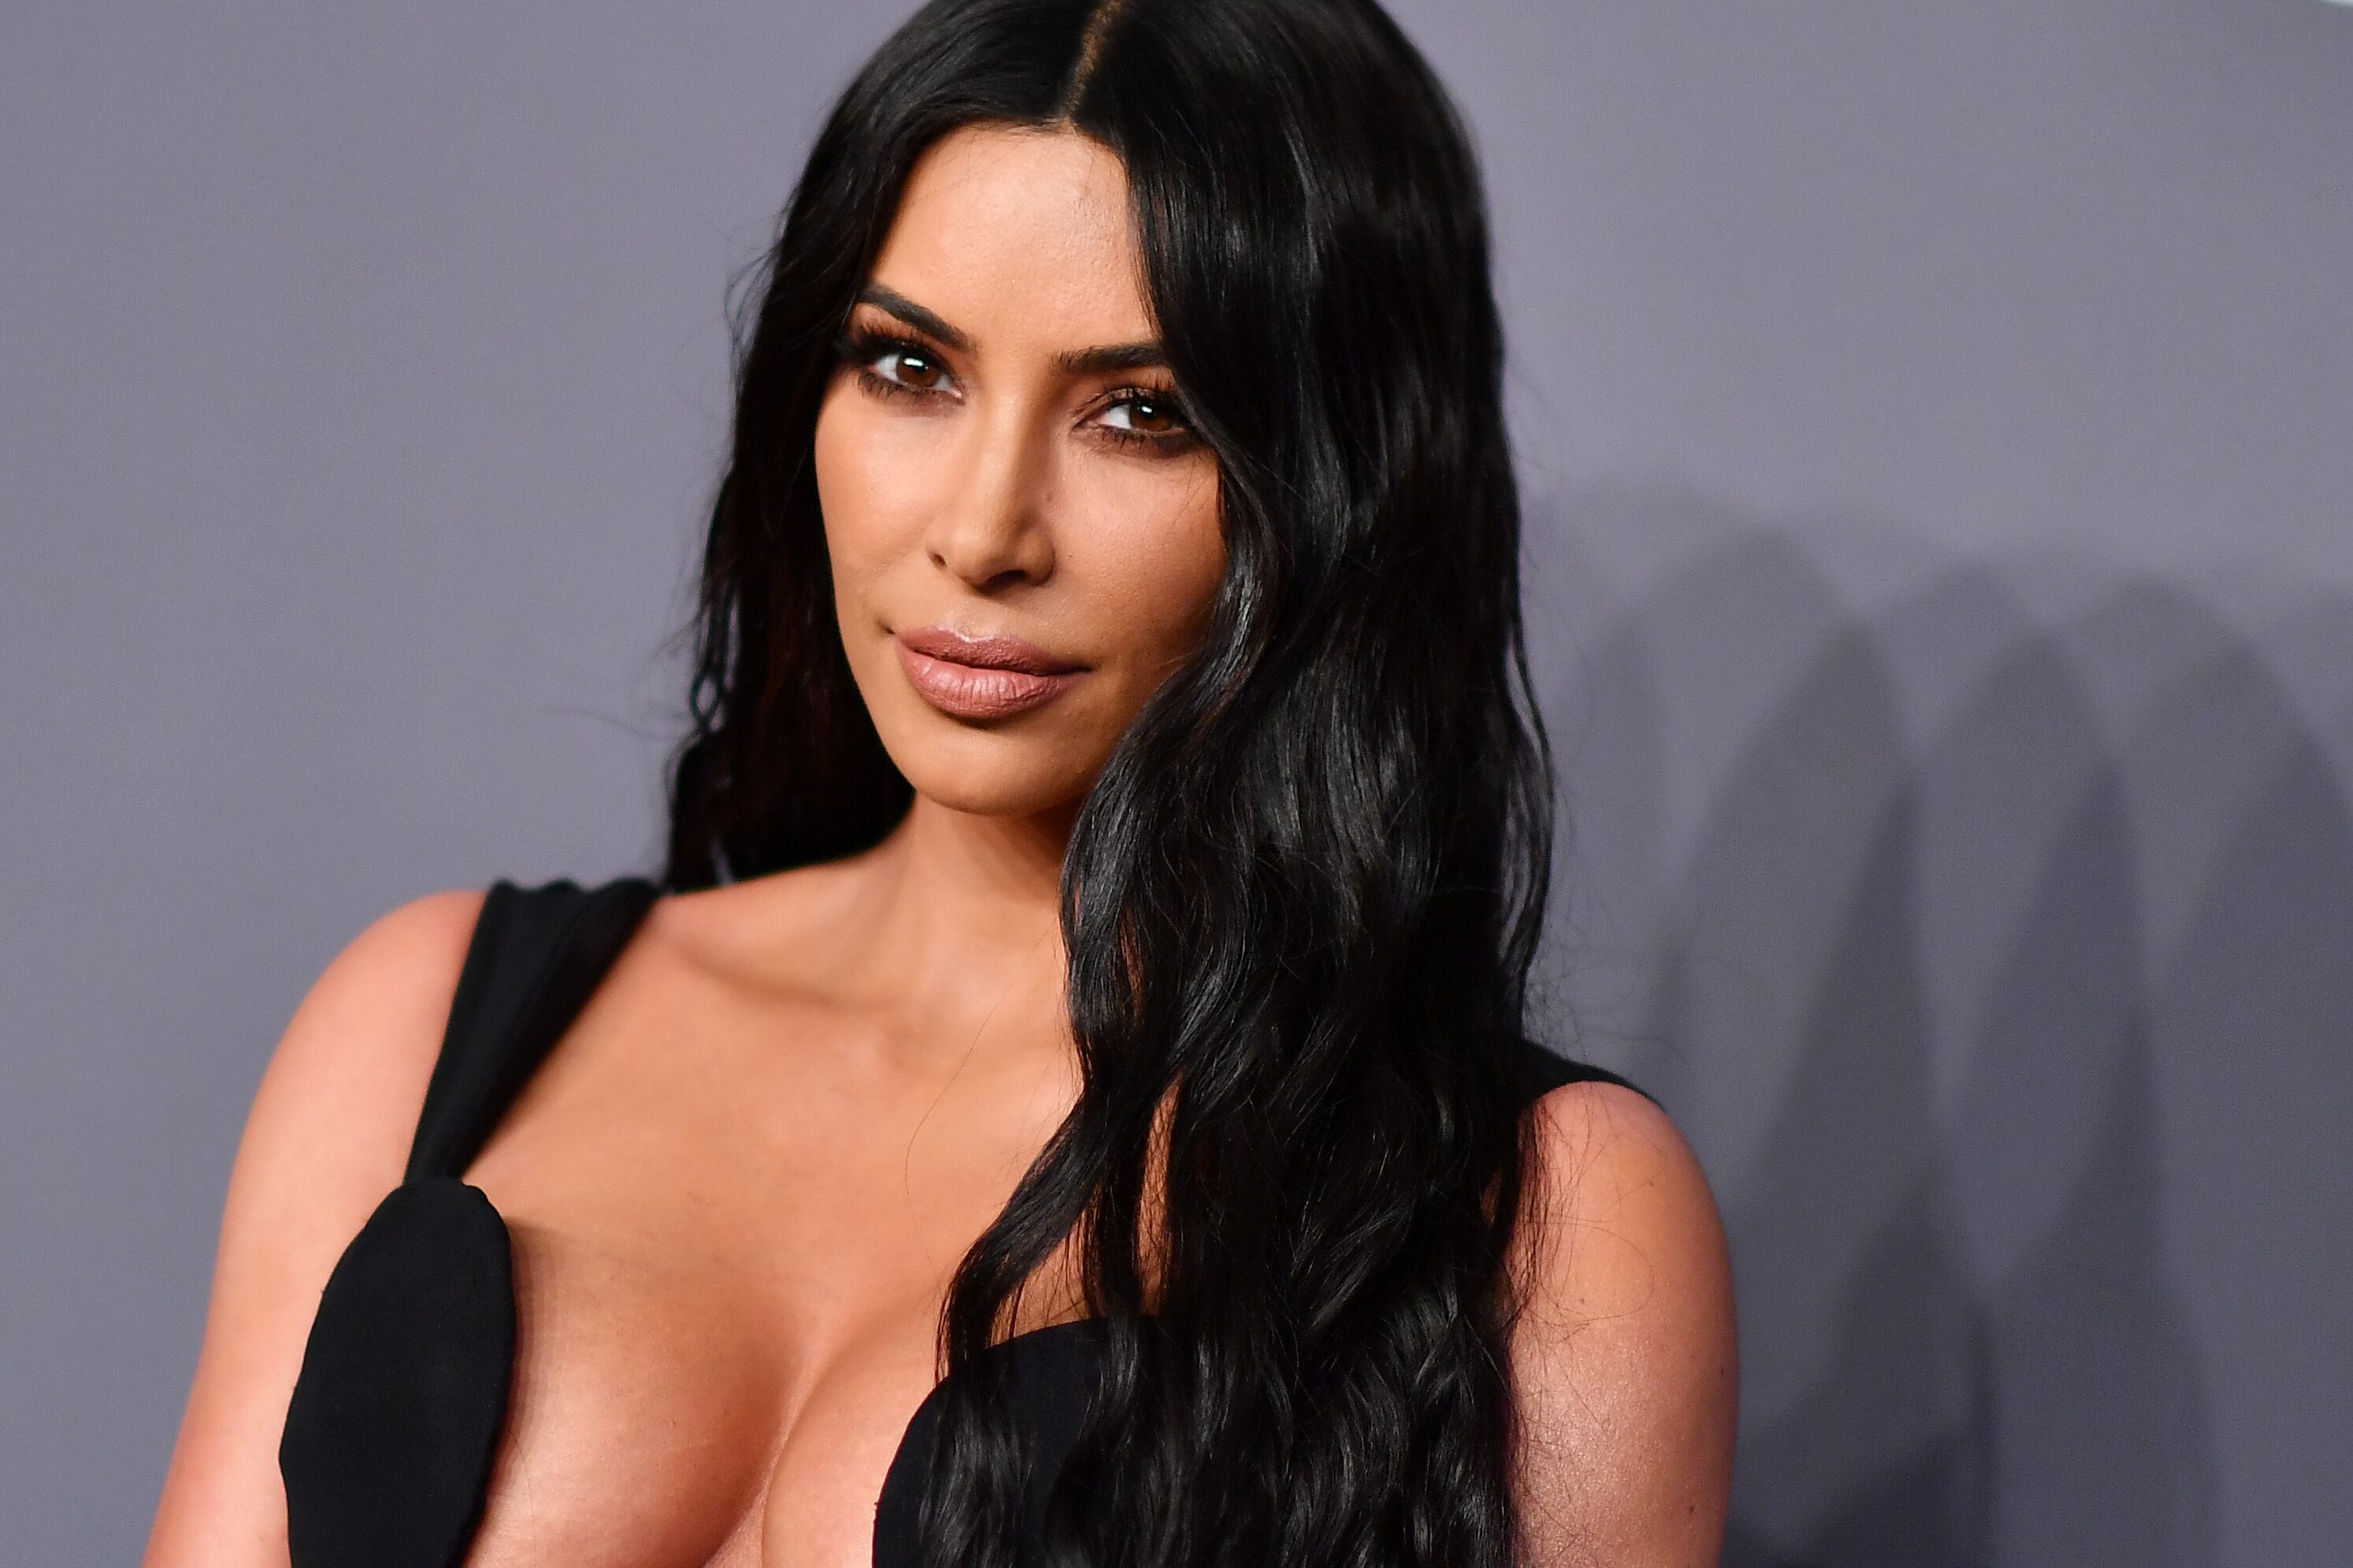 Kim Kardashian denies gifting JFK's bloody shirt to North West: 'That is a sick joke' - www.foxnews.com